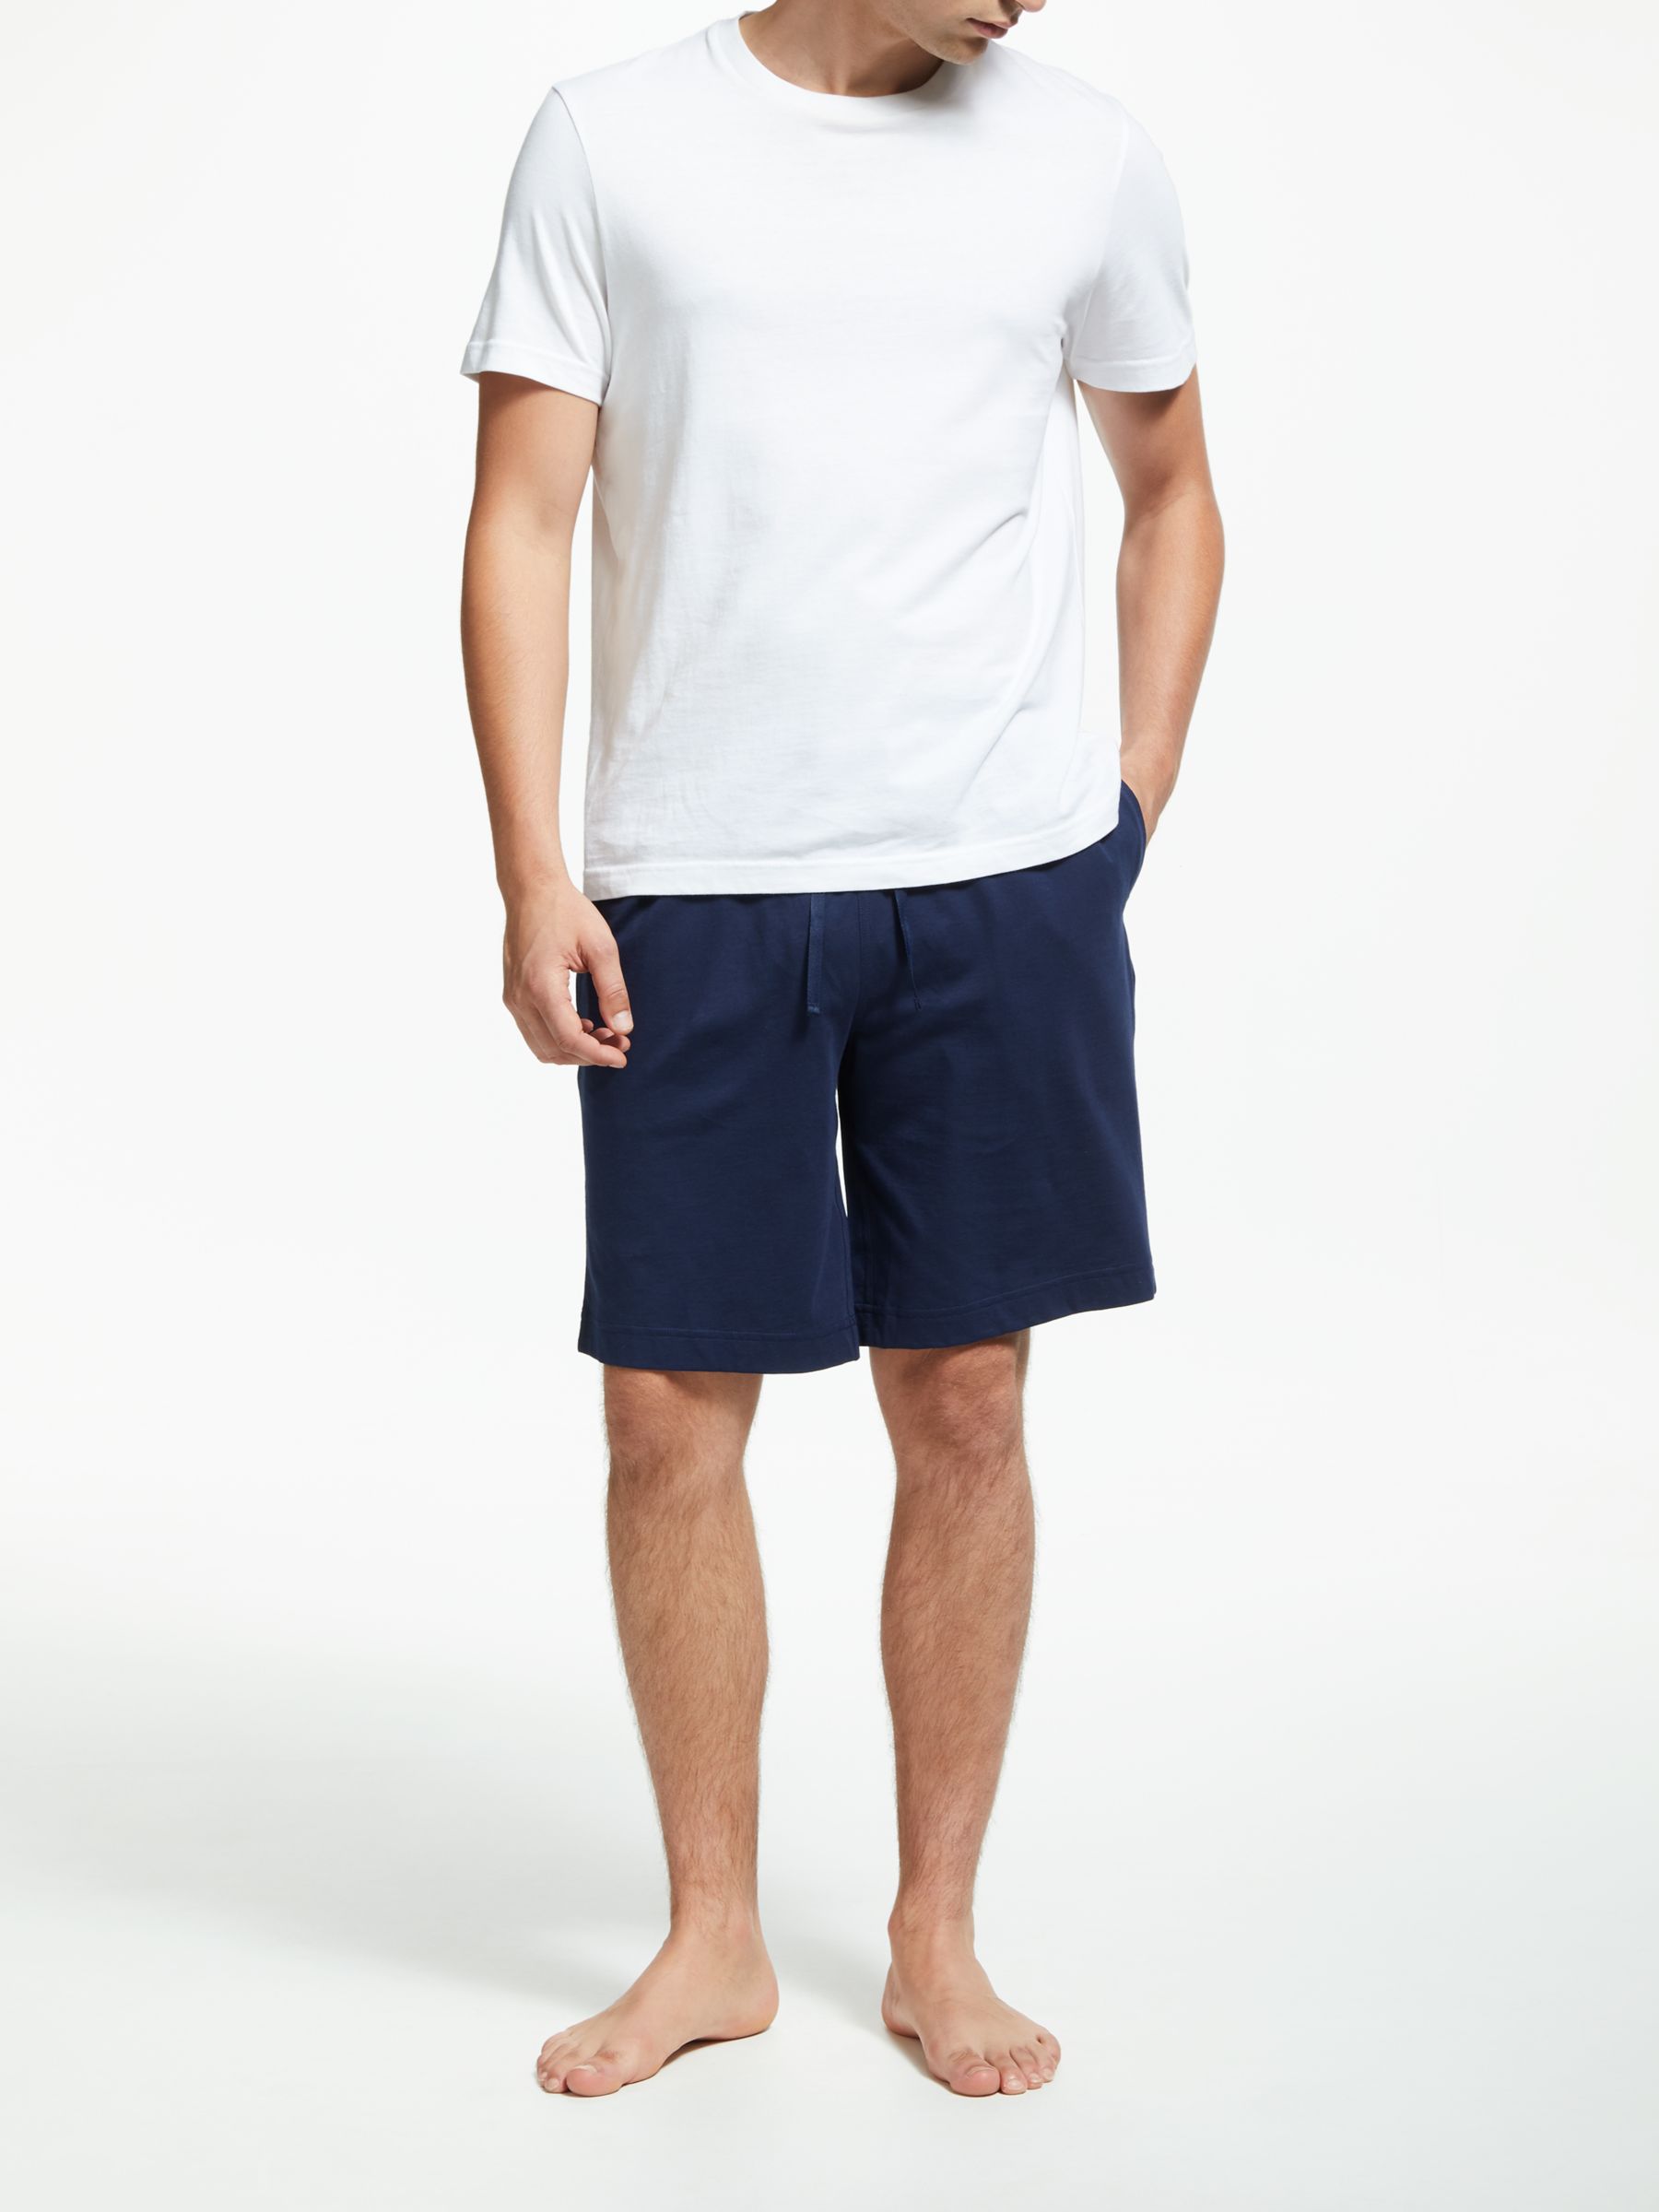 Polo Ralph Lauren Liquid Cotton Lounge Shorts, Navy, S